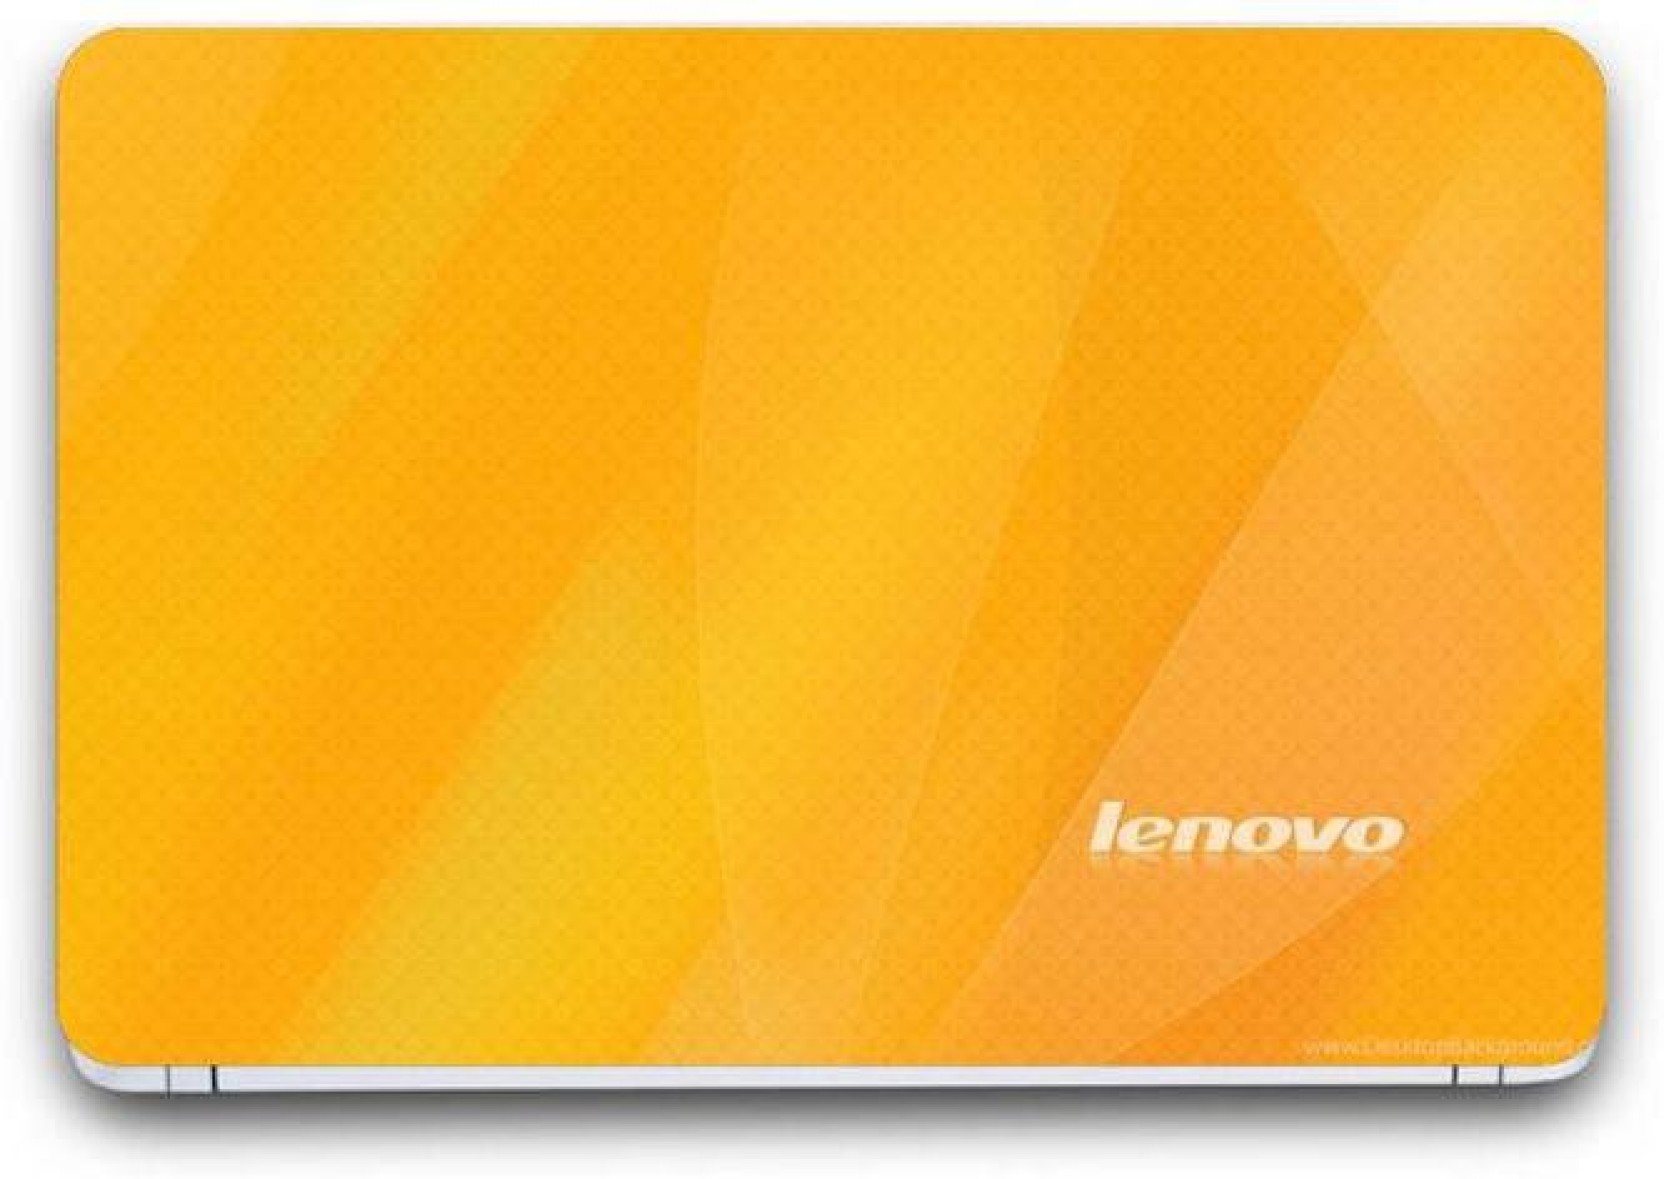 lenovo wallpaper,yellow,orange,technology,computer accessory,mousepad